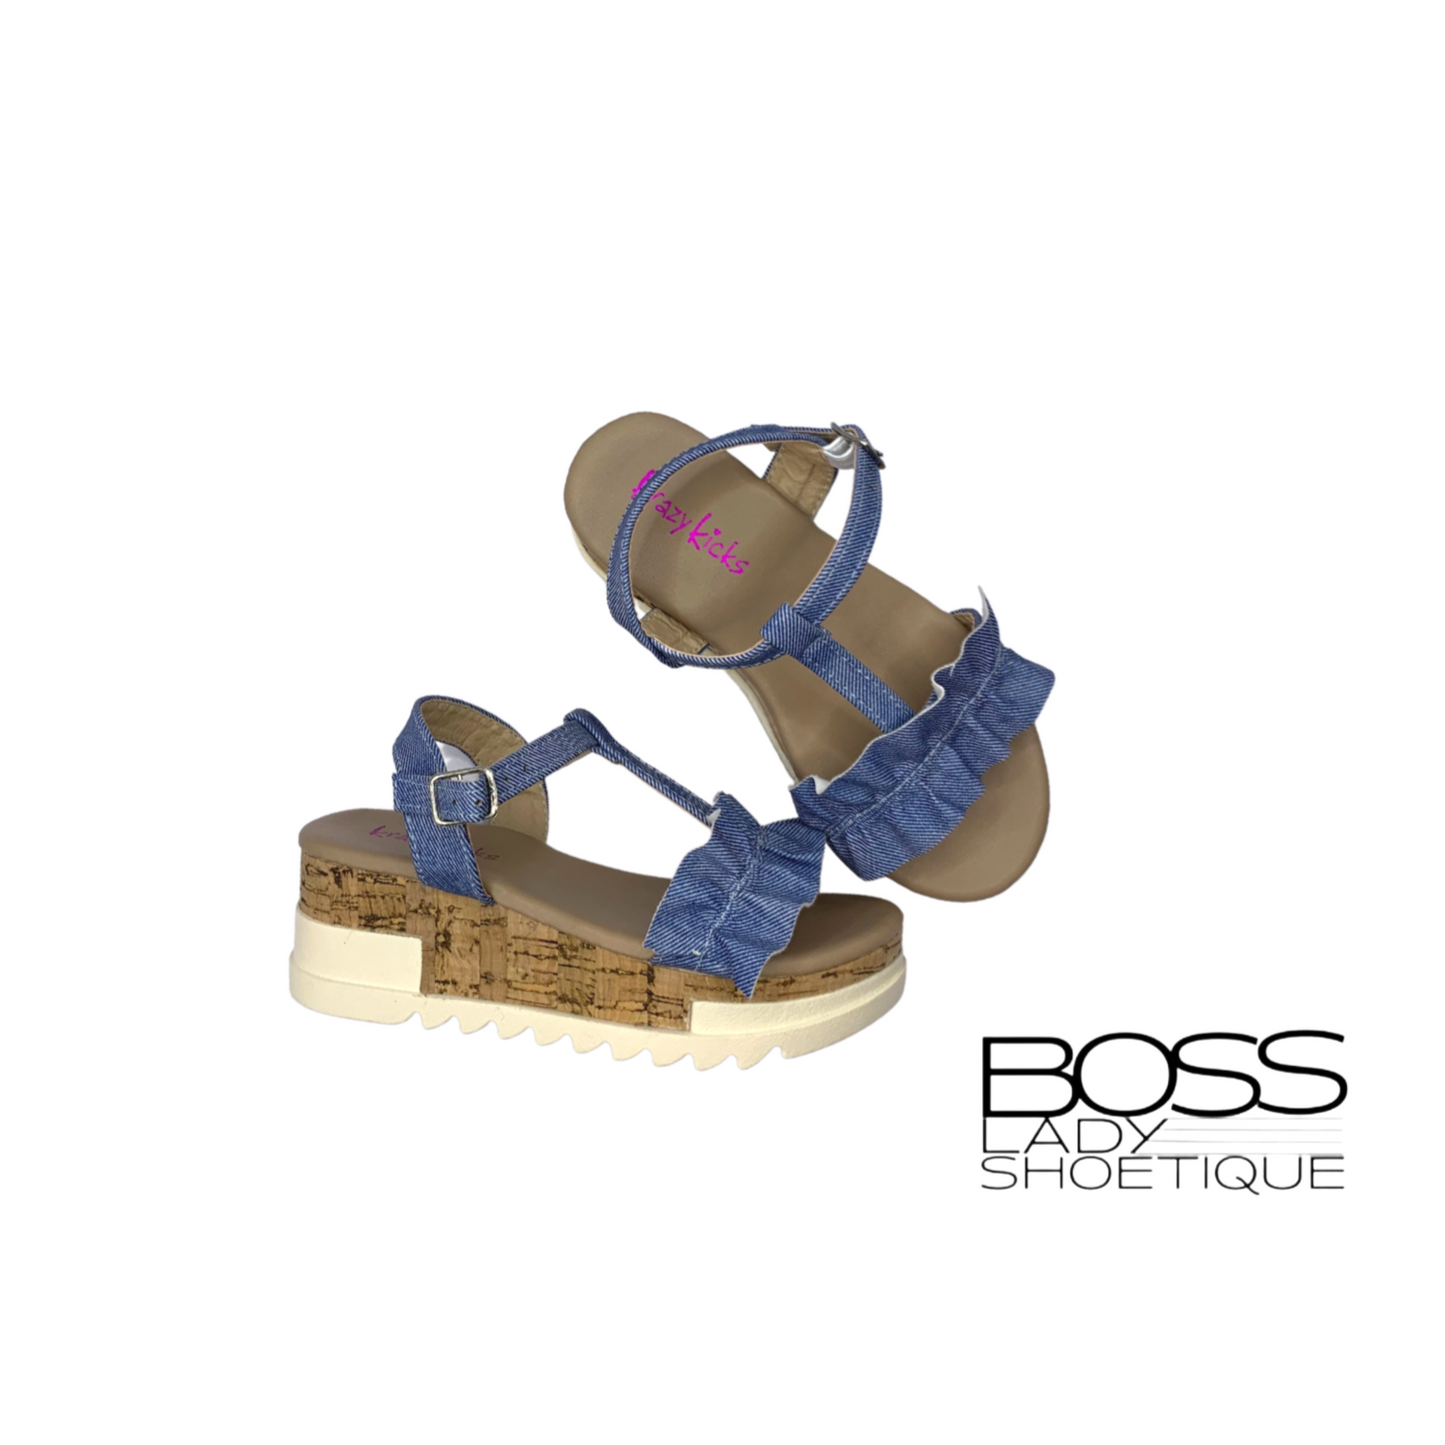 Melody Sandals- Kids - Boss Lady Shoetique 